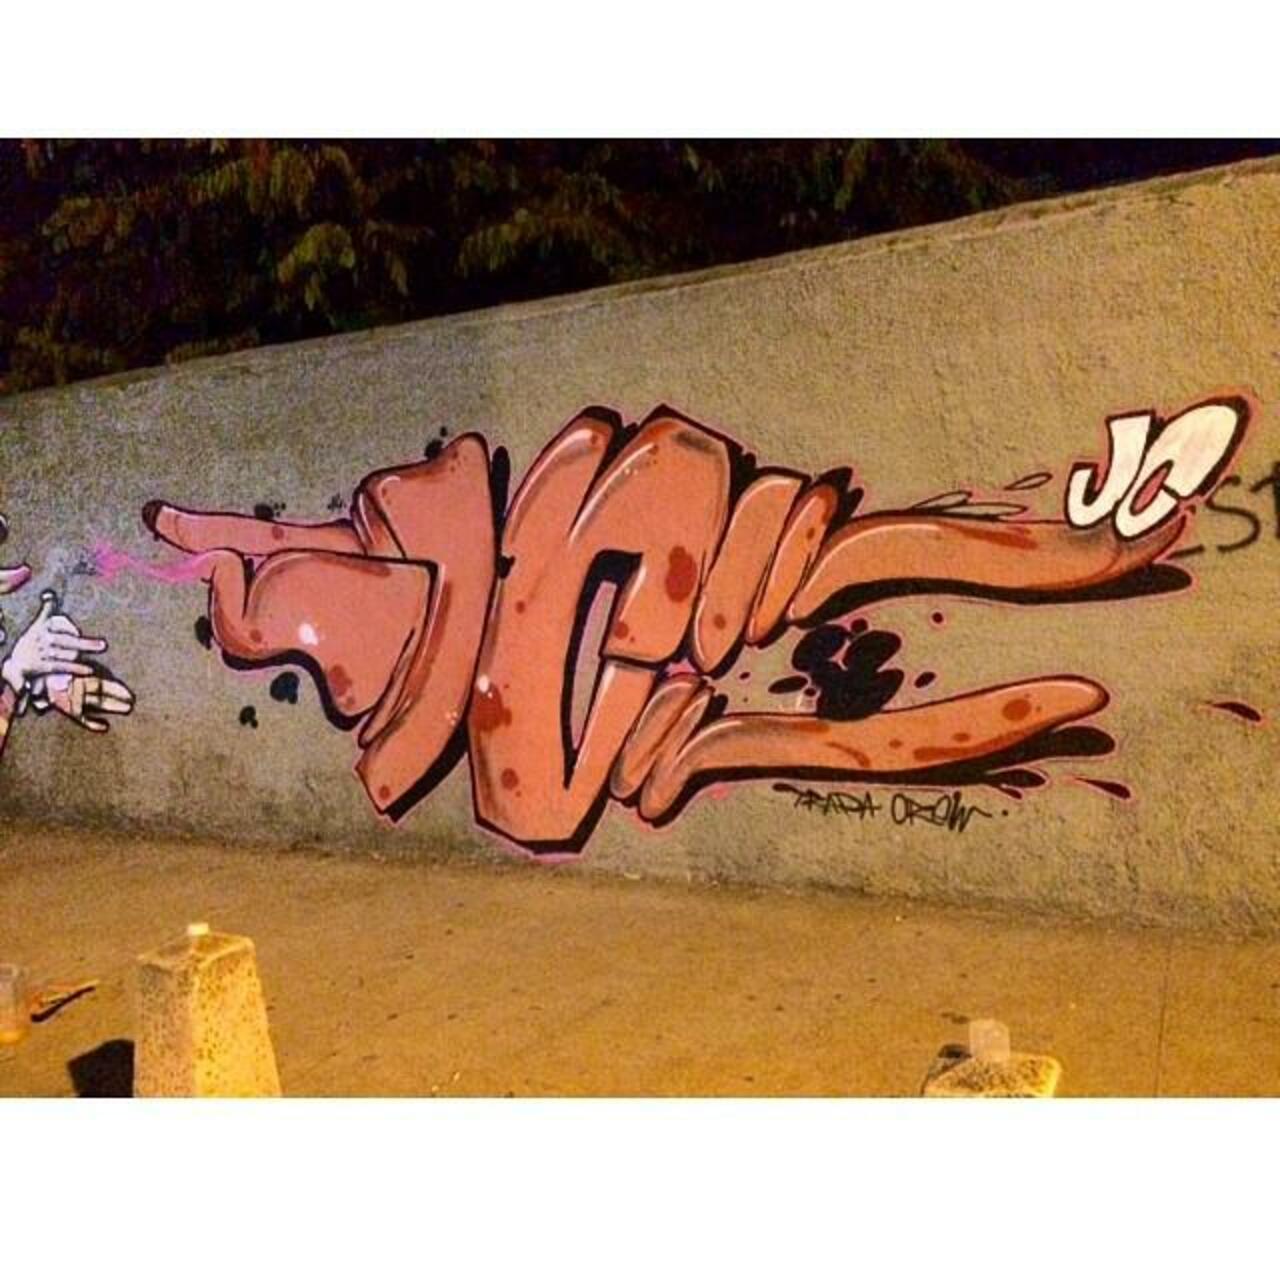 JC  #instaart #spray #riodejaneiro #rj #instagraffiti #graffiti #graffite #artederua #art #artist #urbanart #graff… http://t.co/zUWEjd0FJo